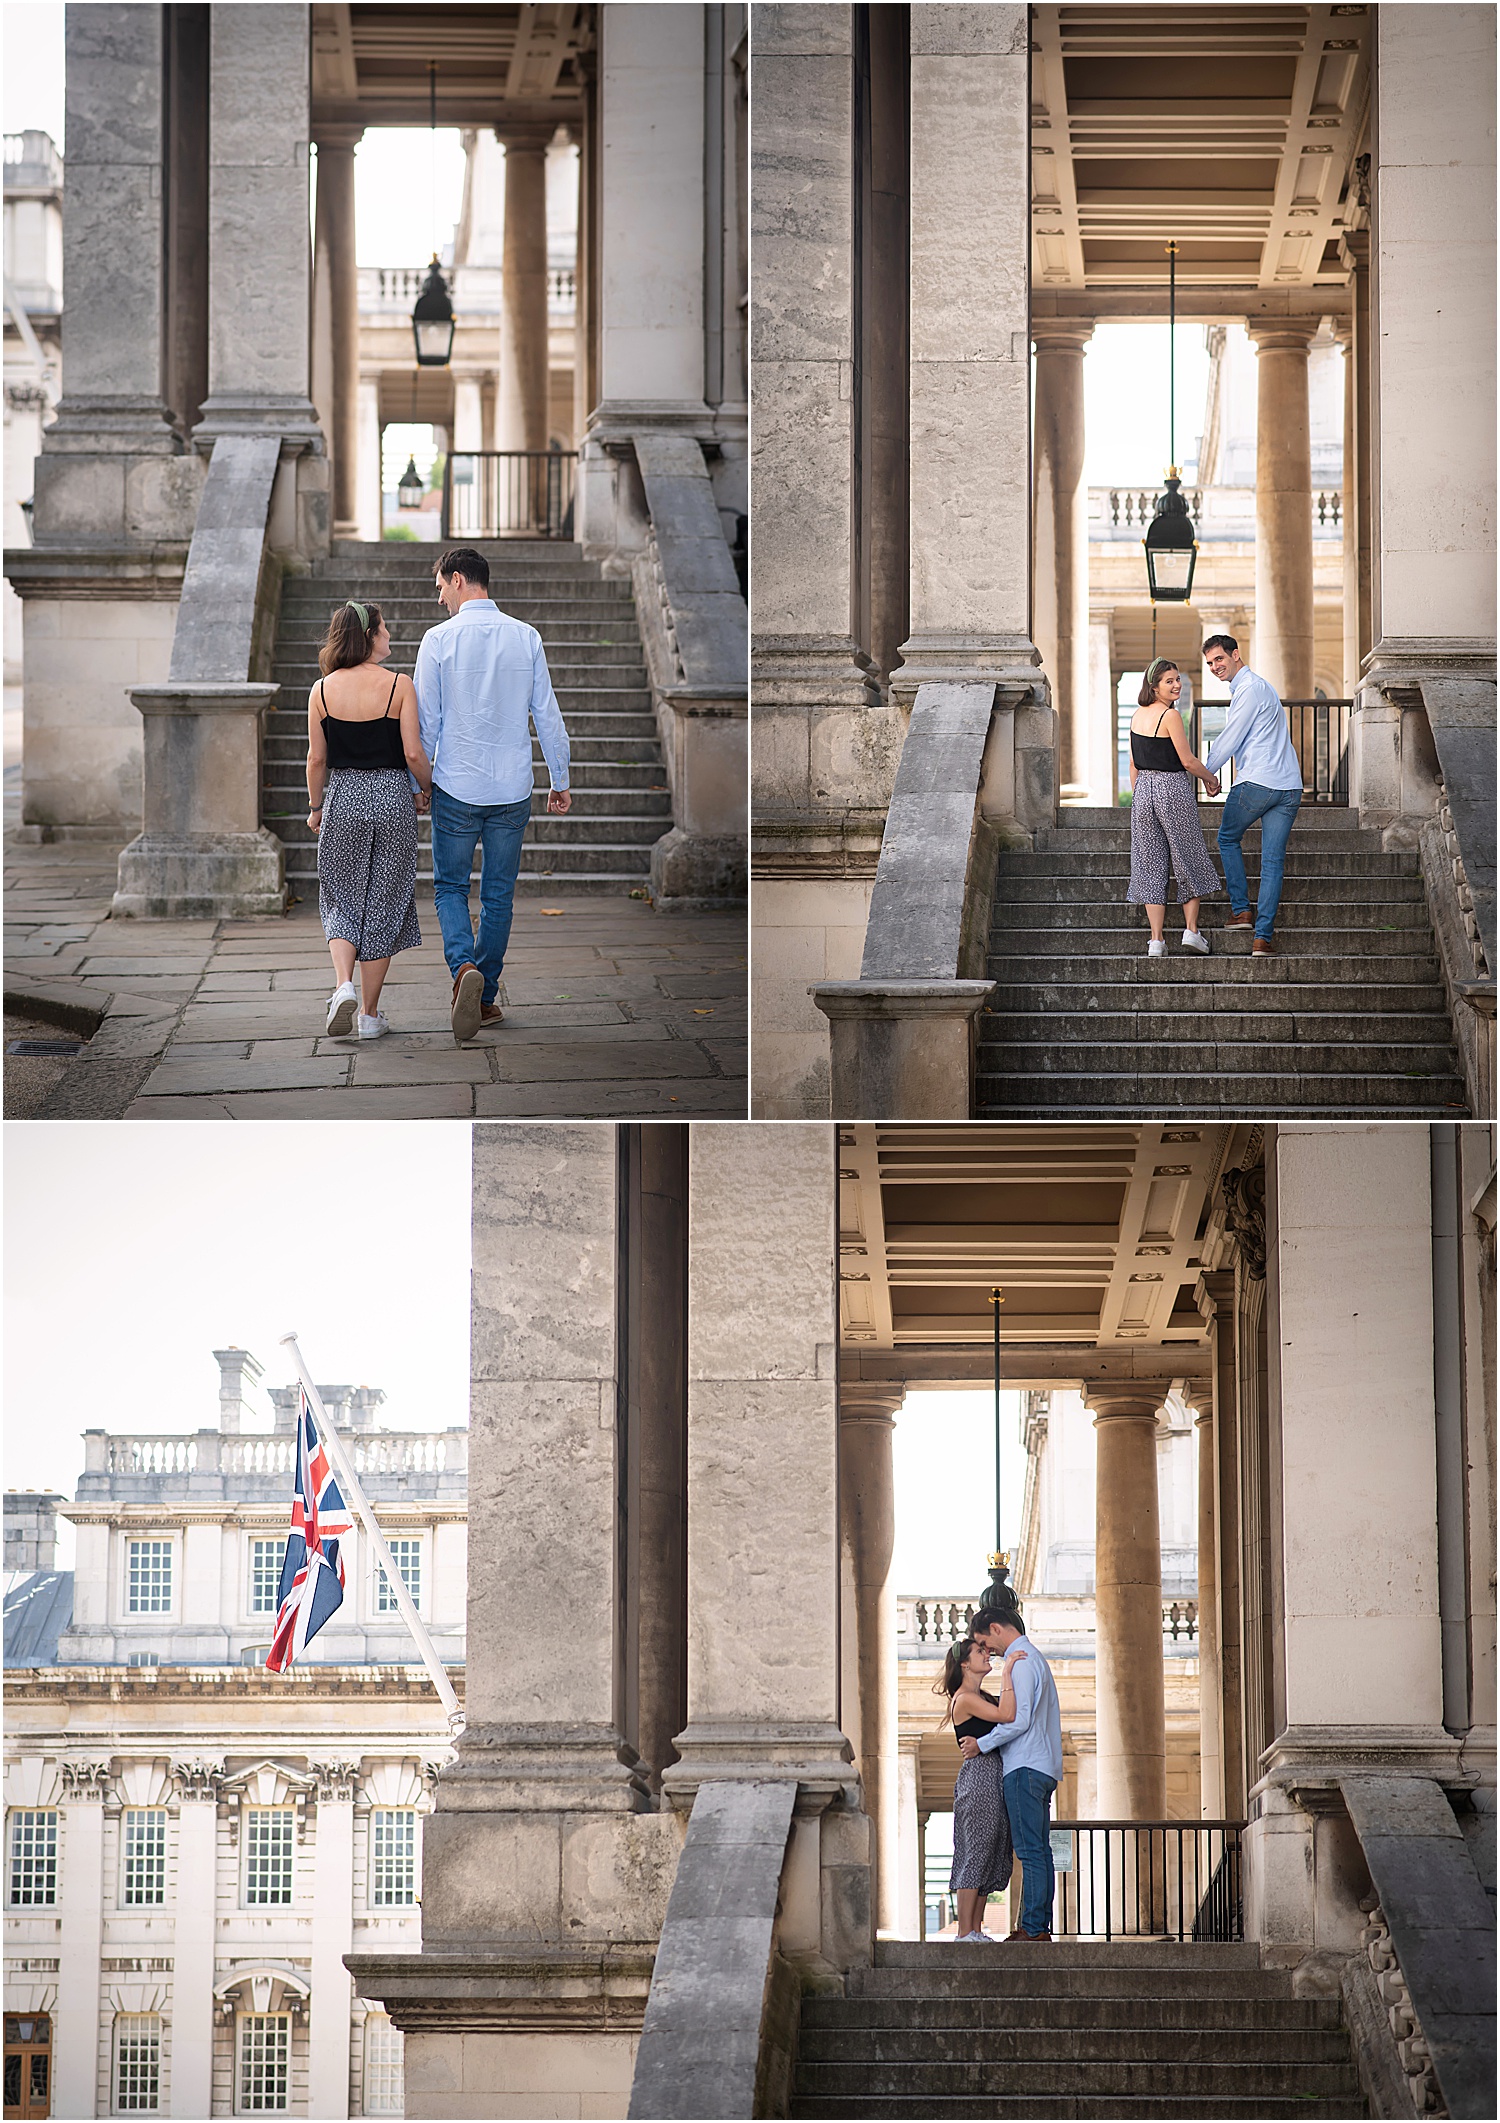 Rich-Jen-Greenwich-Park-engagement-photoshoot-session-lily-sawyer-photo